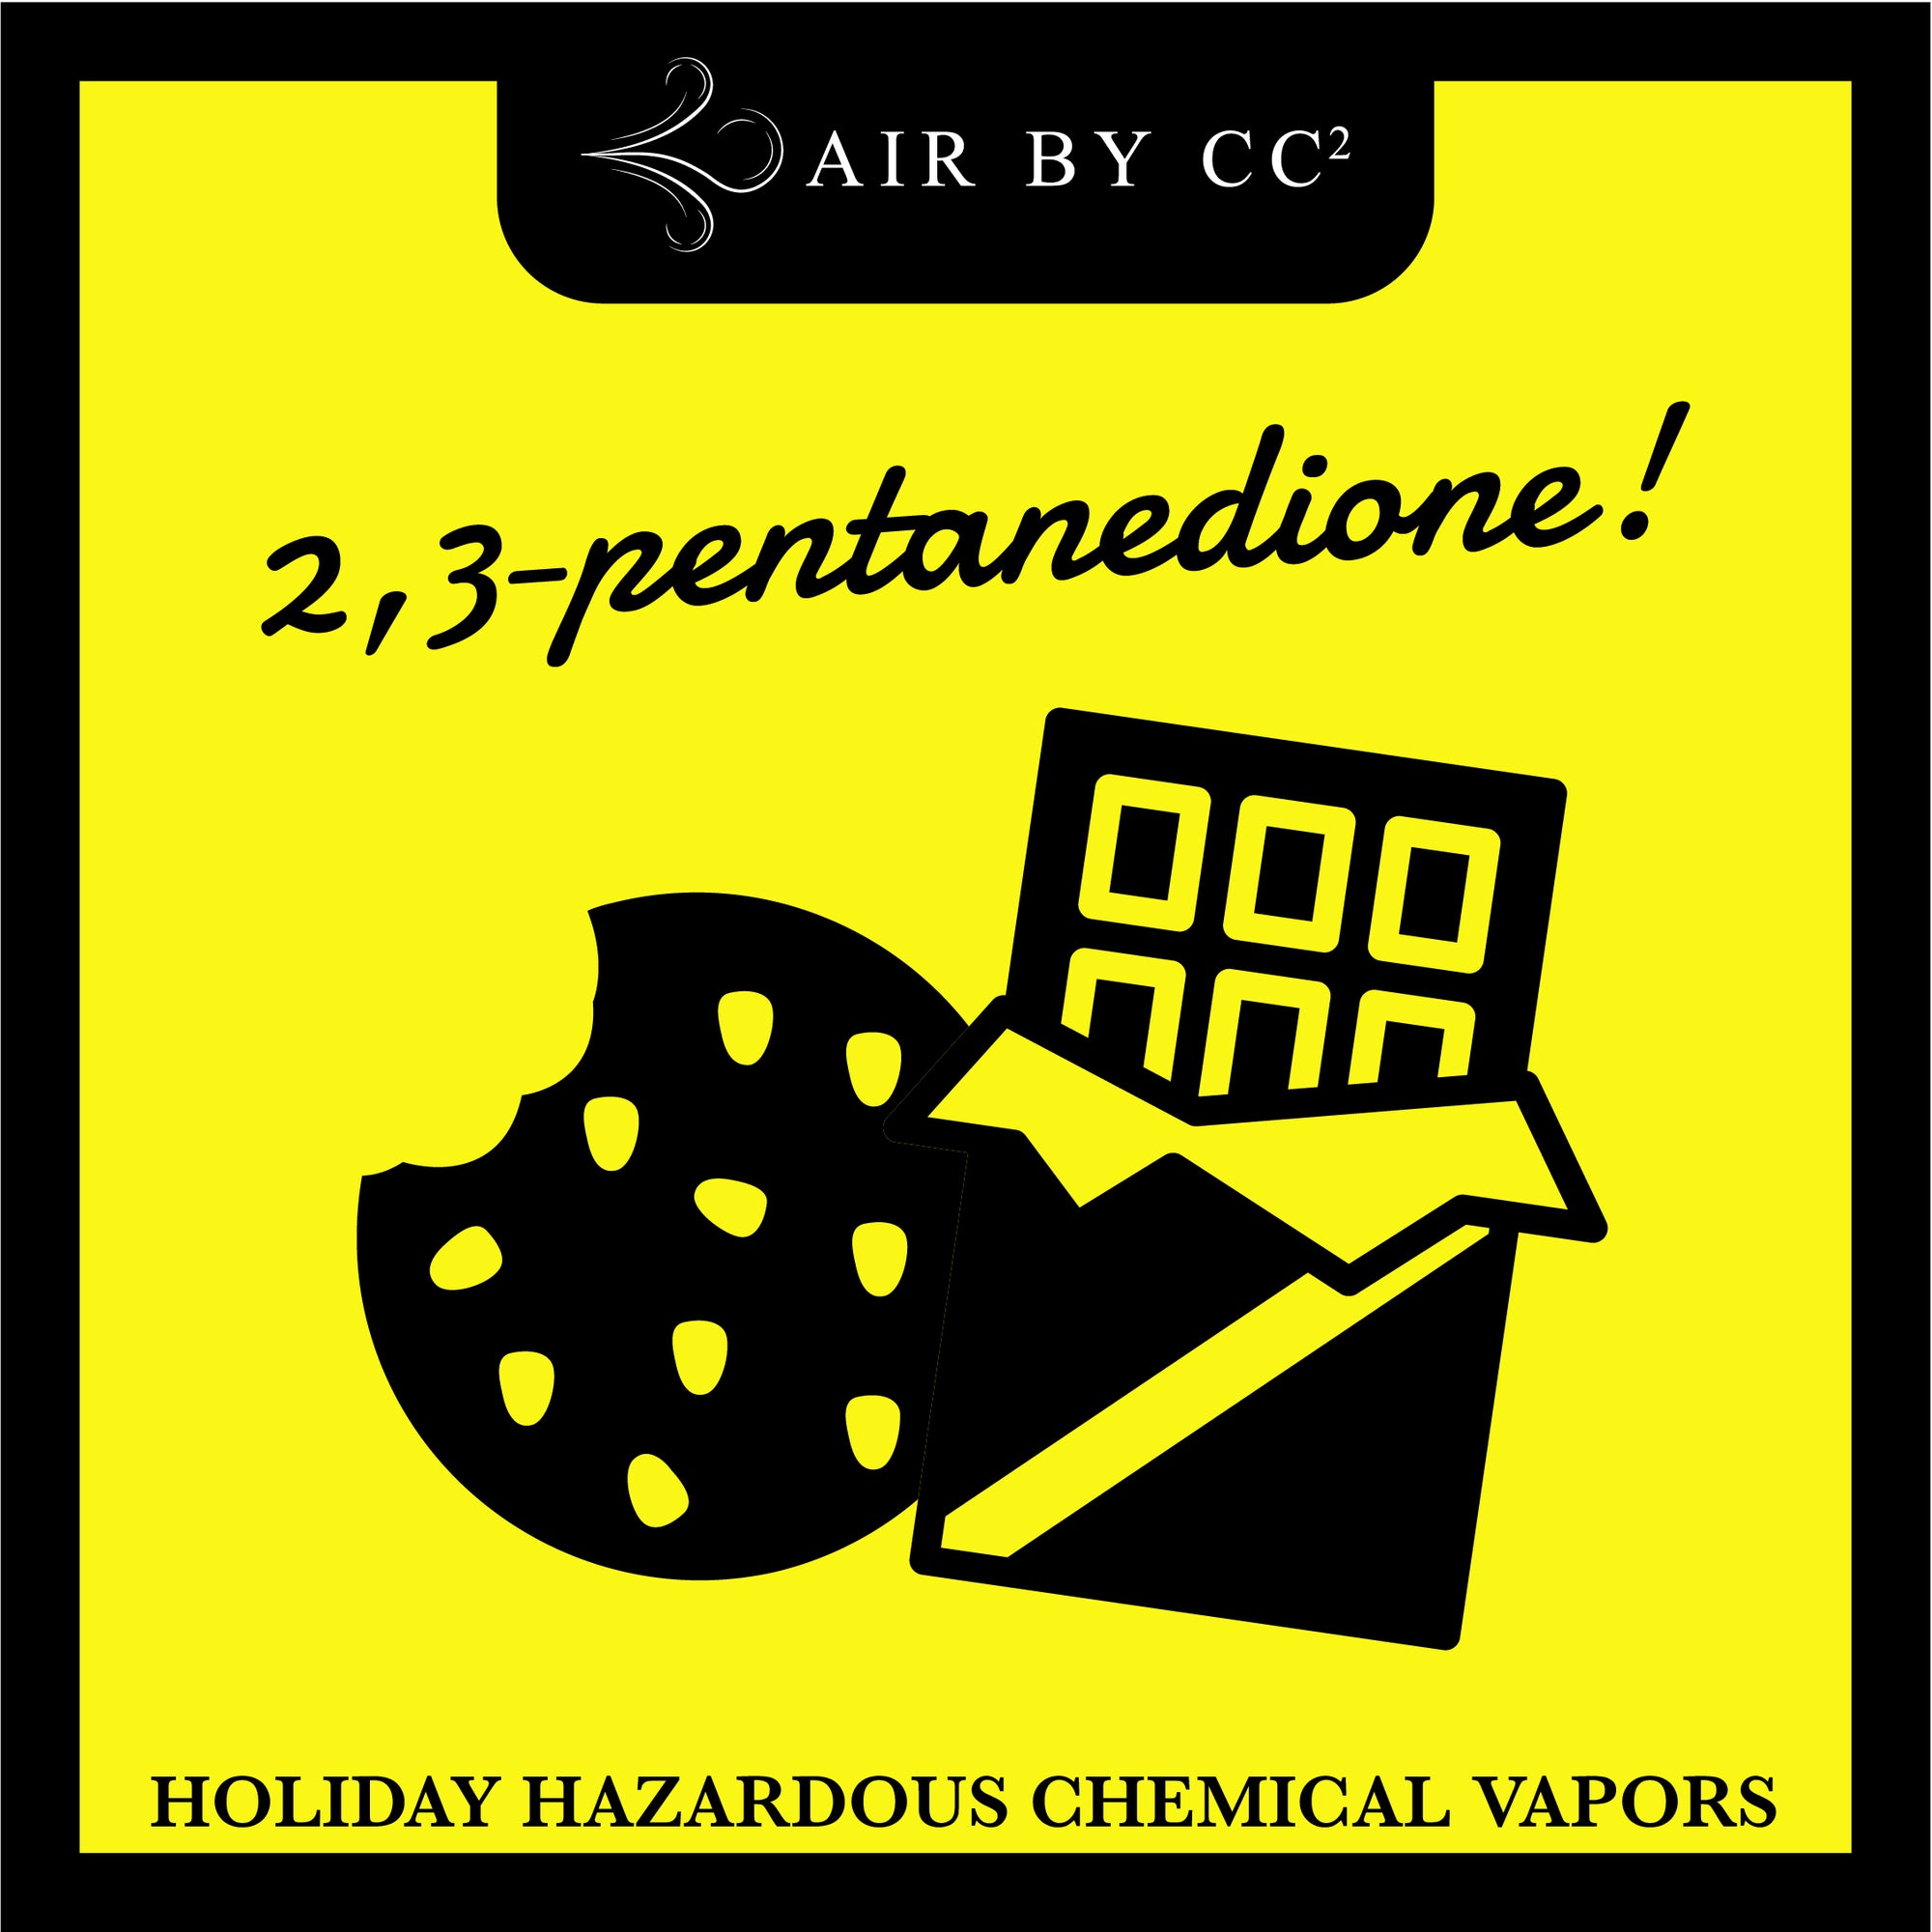 Today’s Holiday Hazardous Vapor is  2,3-pentanedione